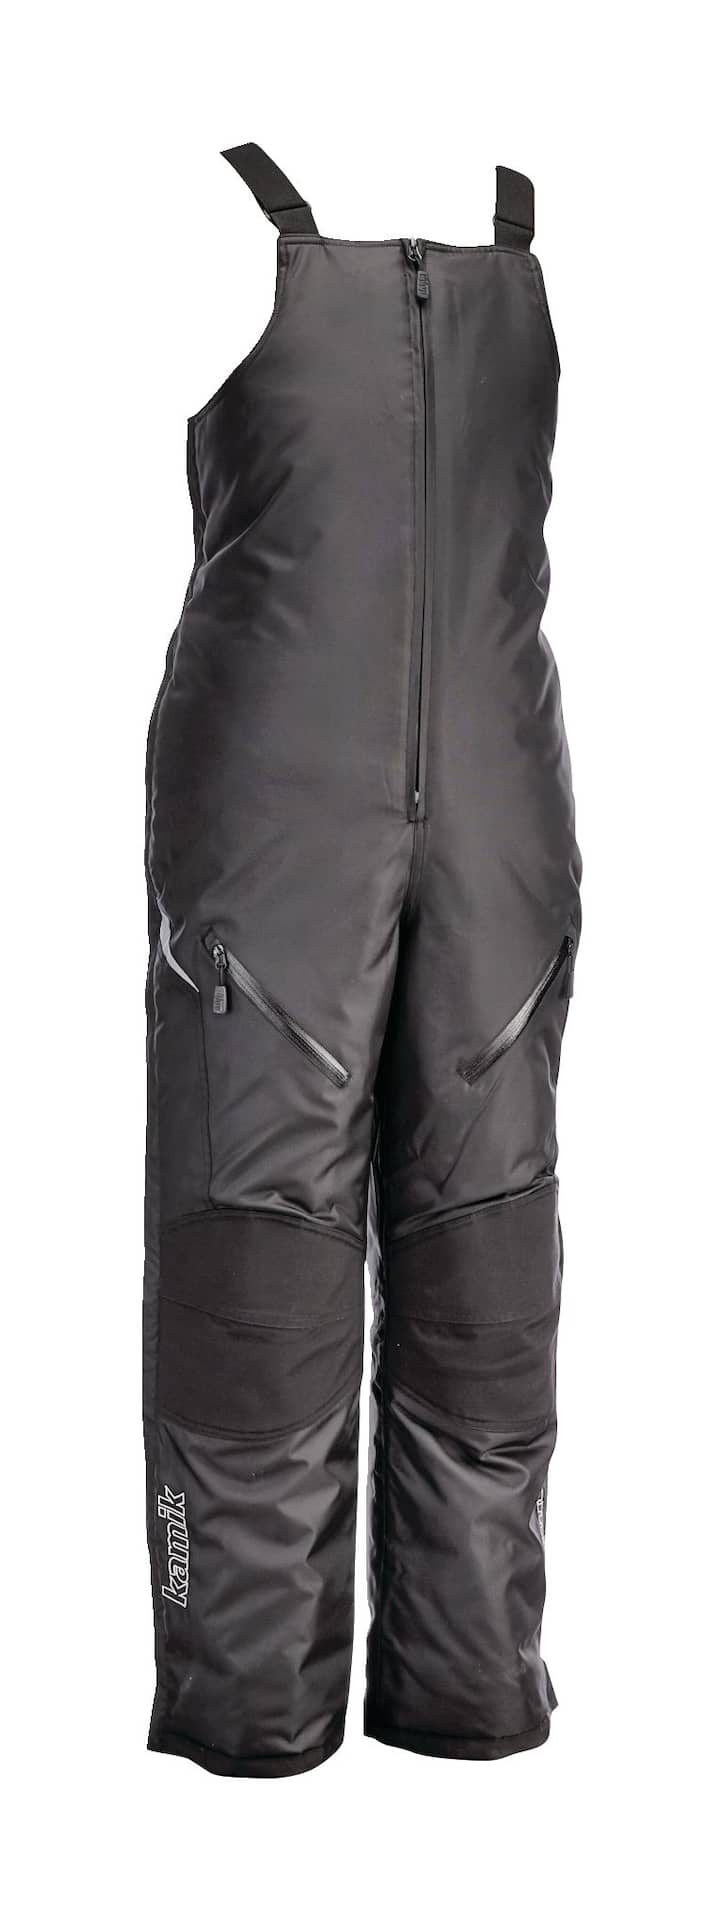 Hot sale waterproof Ski pants Women winter professional outdoor sports high  quality XL single board warm ski pants men S-XXXL